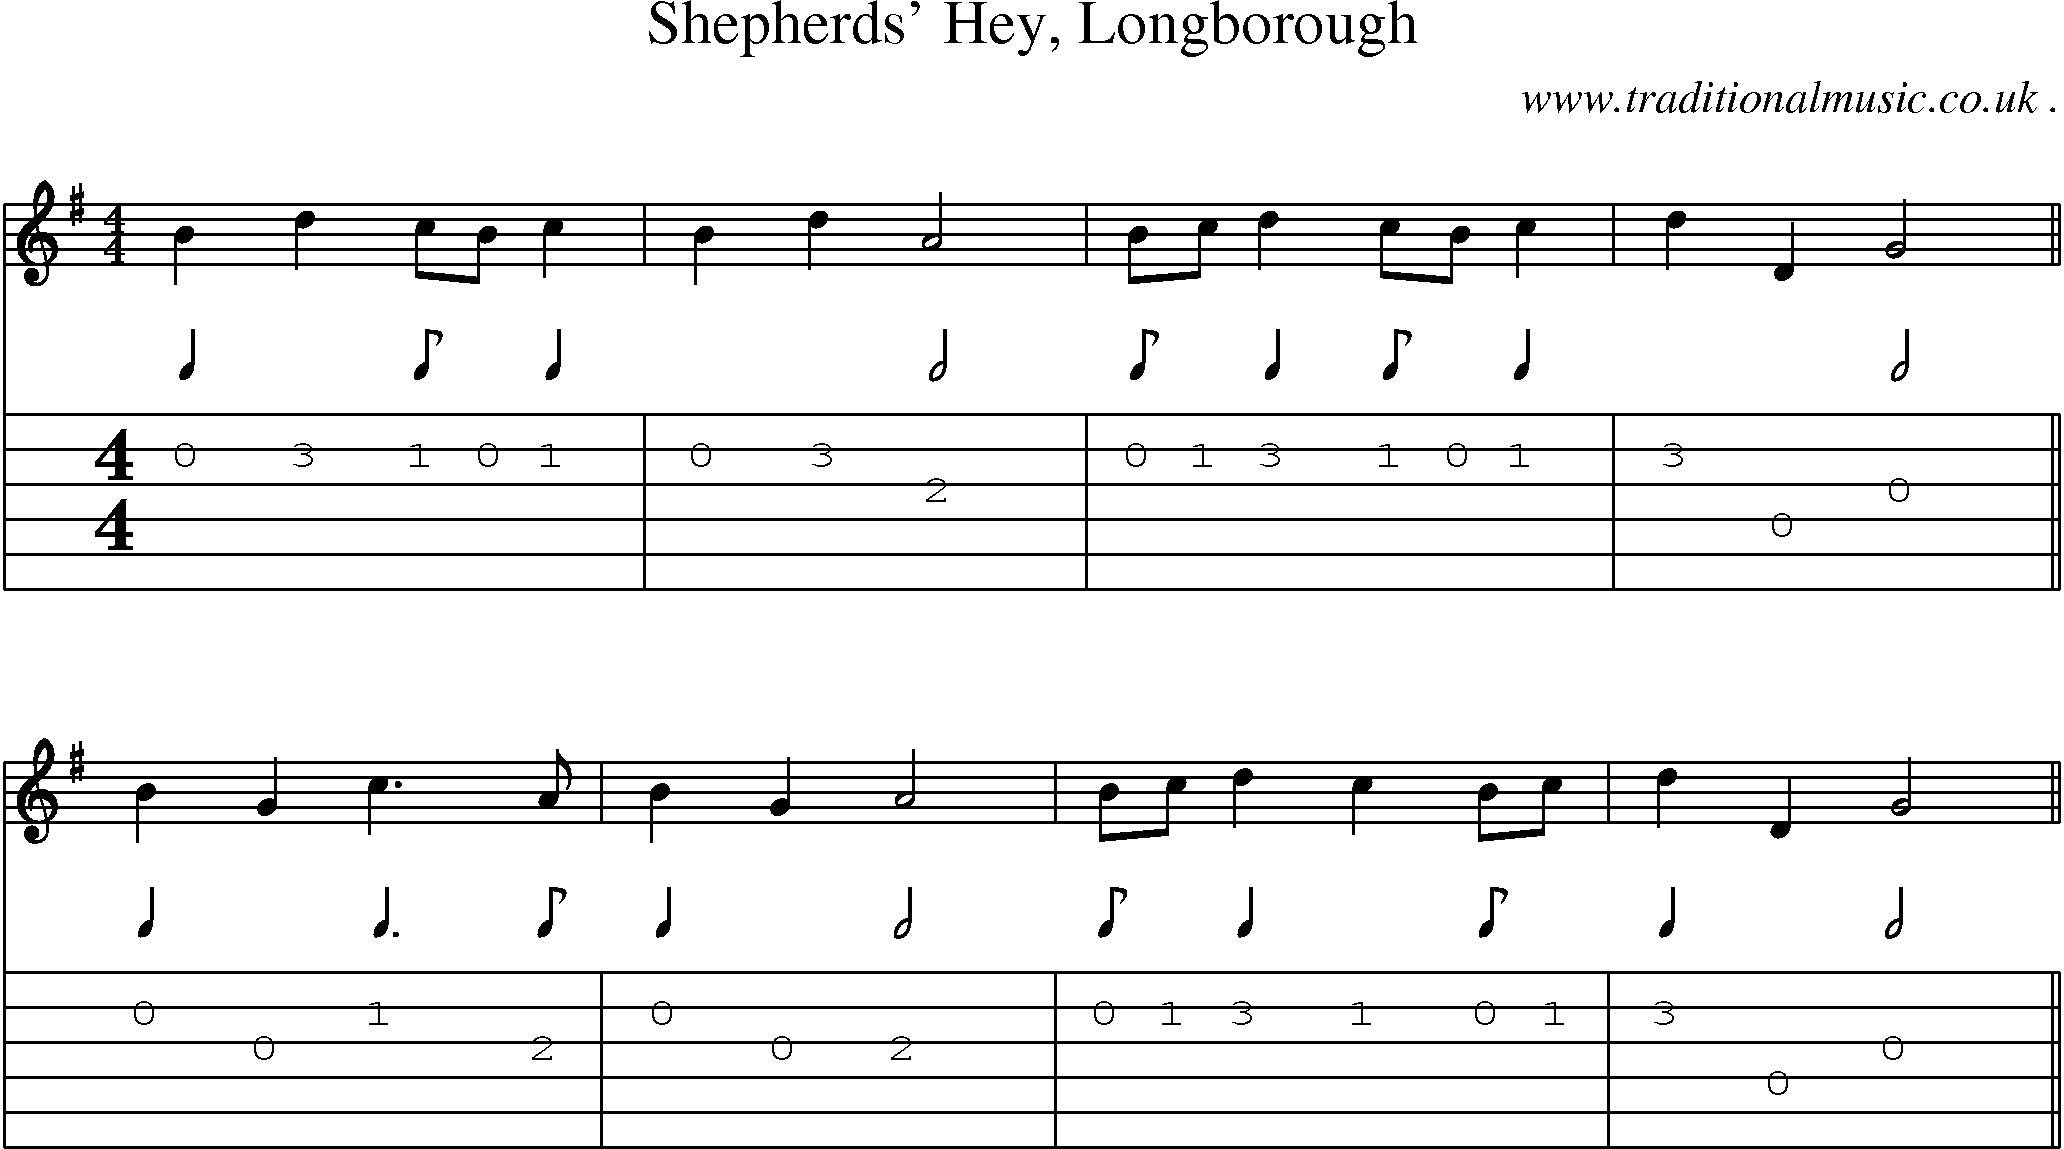 Sheet-Music and Guitar Tabs for Shepherds Hey Longborough